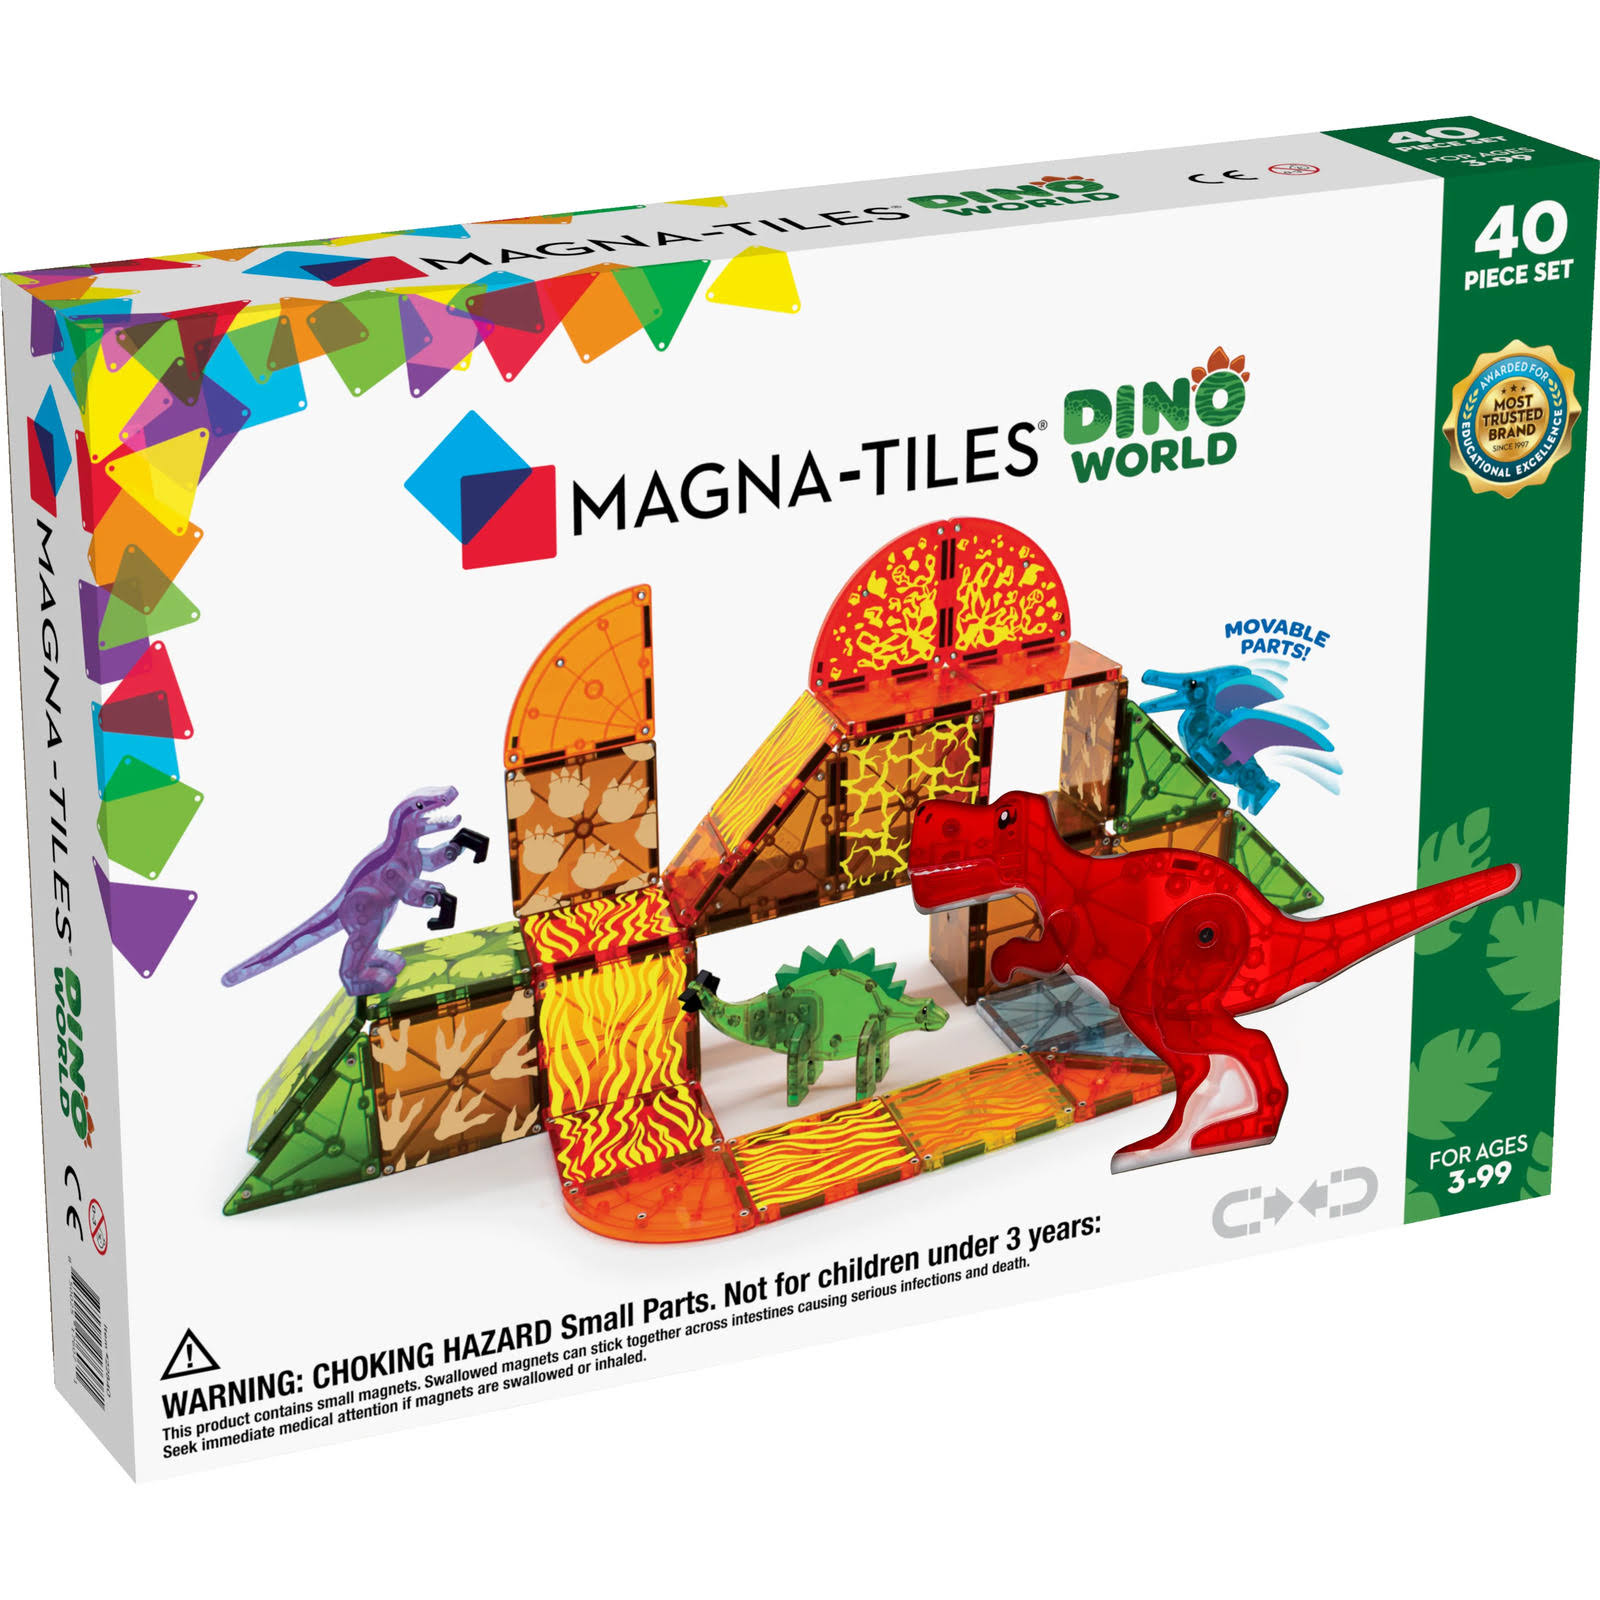 Magna-Tiles Dino World 40 Piece Set